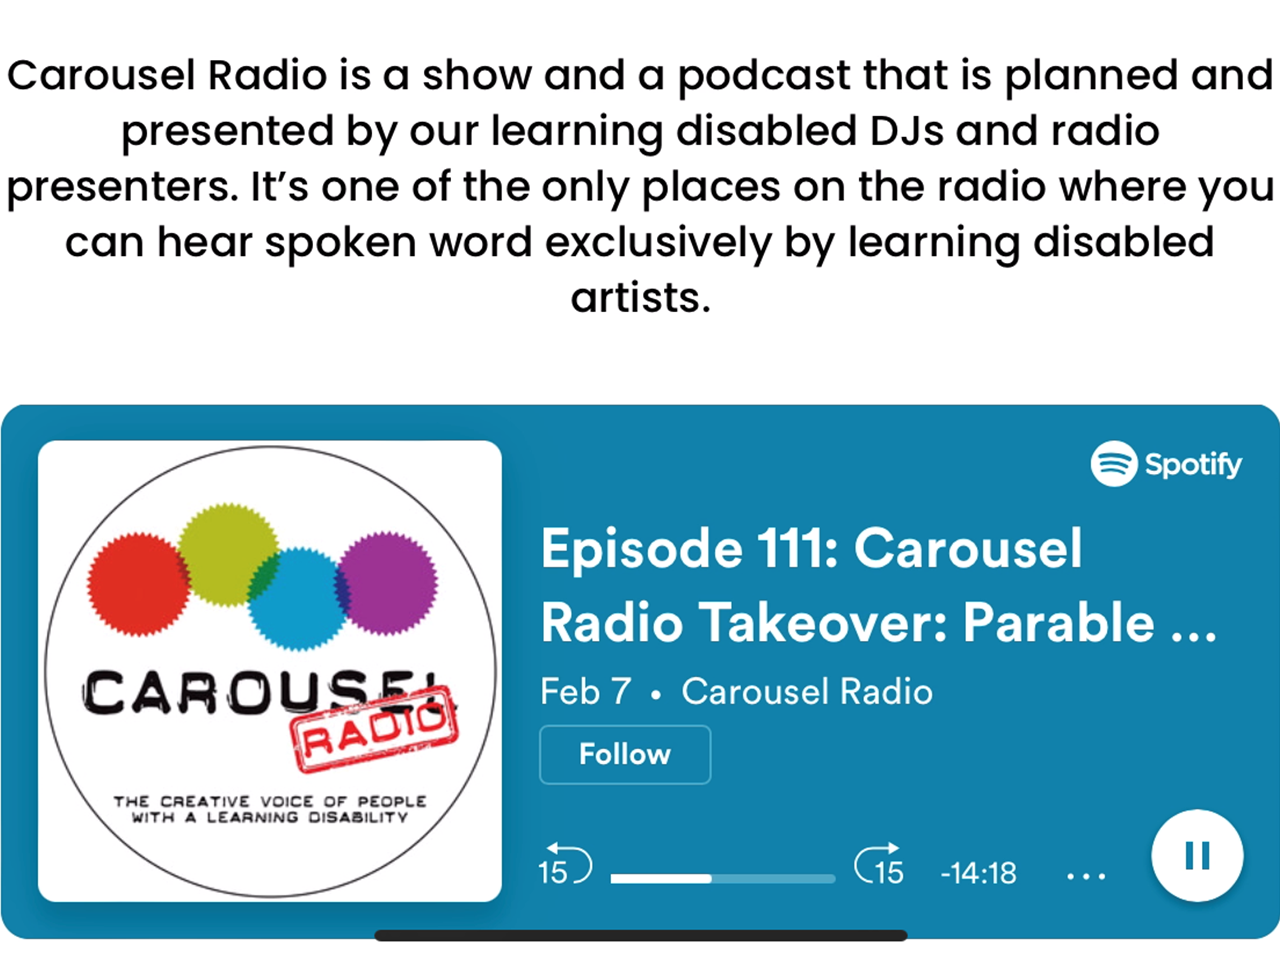 Carousel Radio takeover